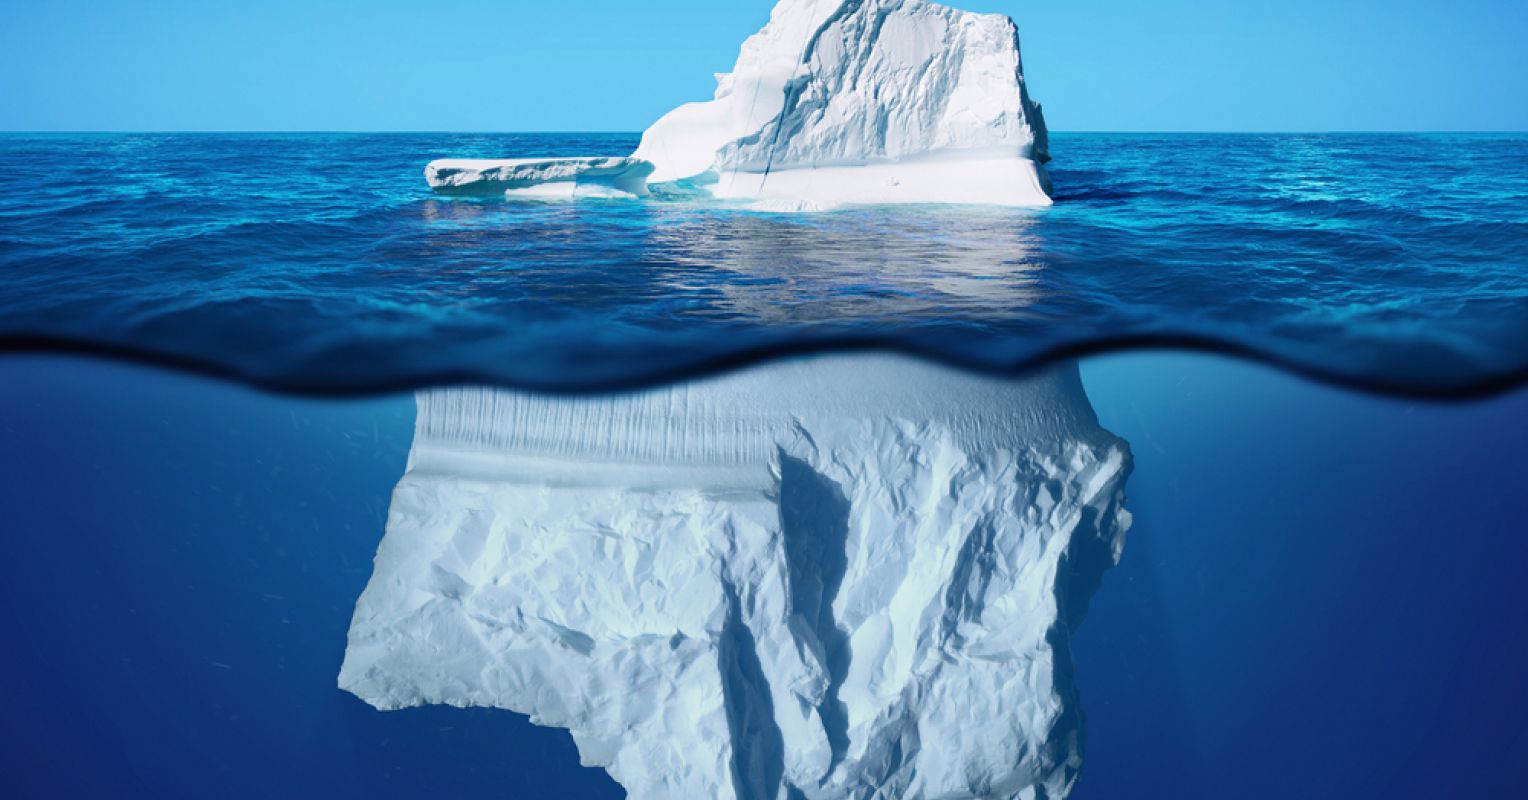 psychoanalysis iceberg